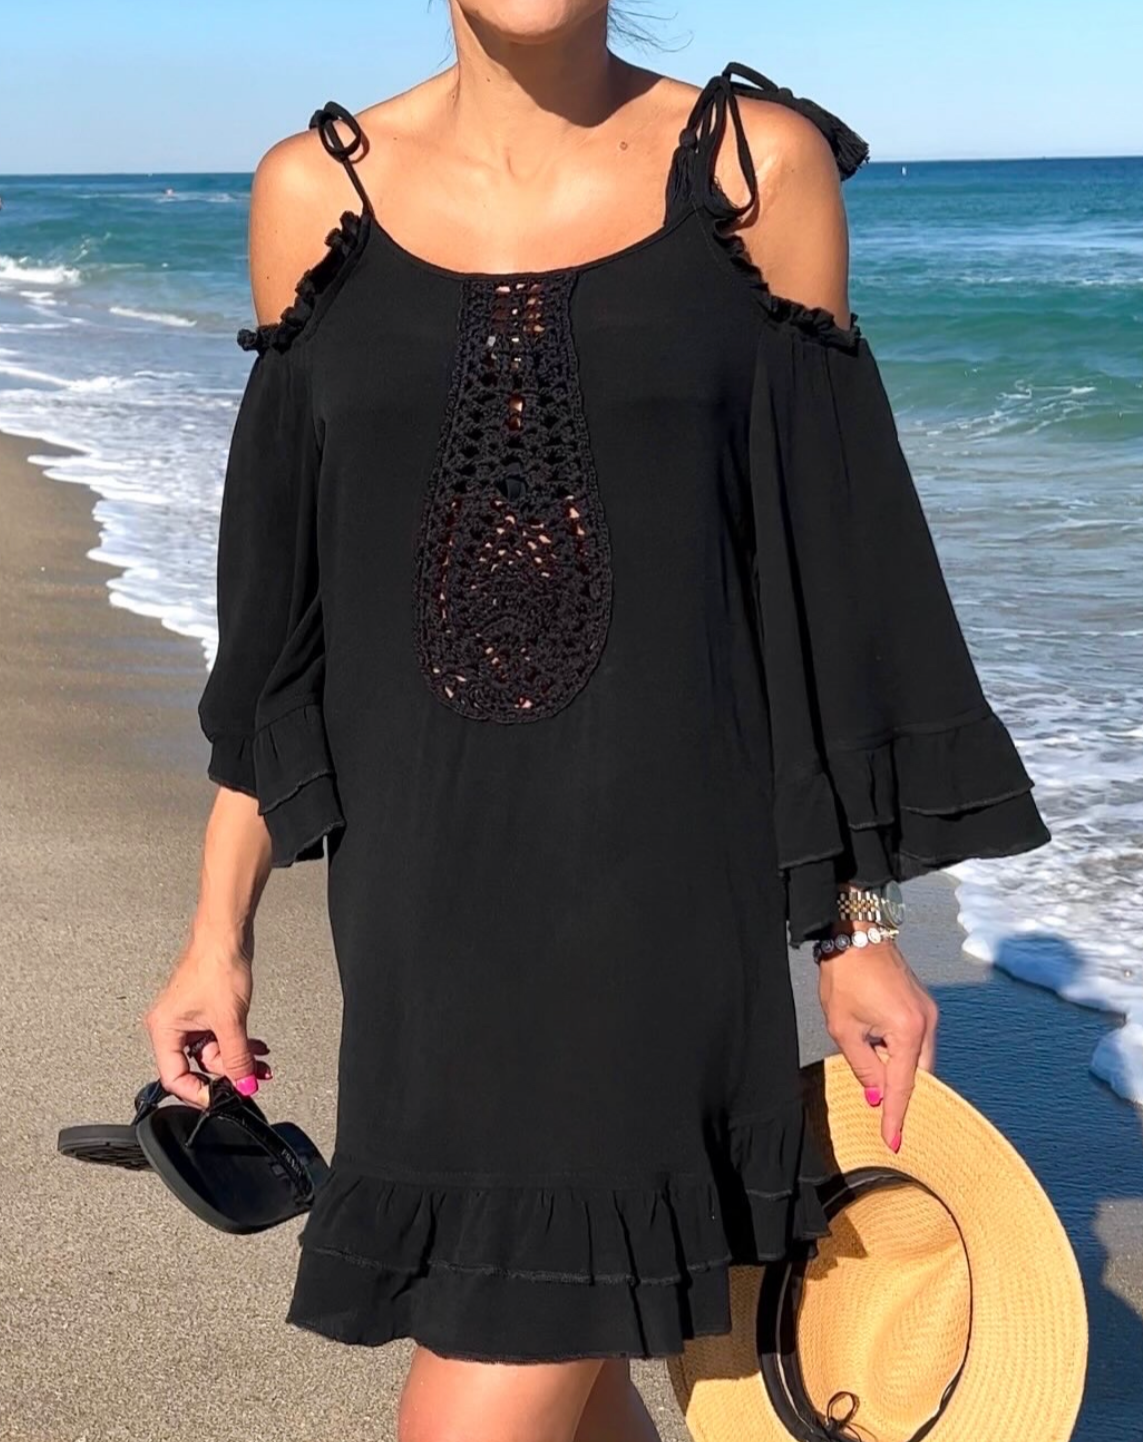 Surf Gypsy Cold Shoulder Beach Cover Up Dress - Black